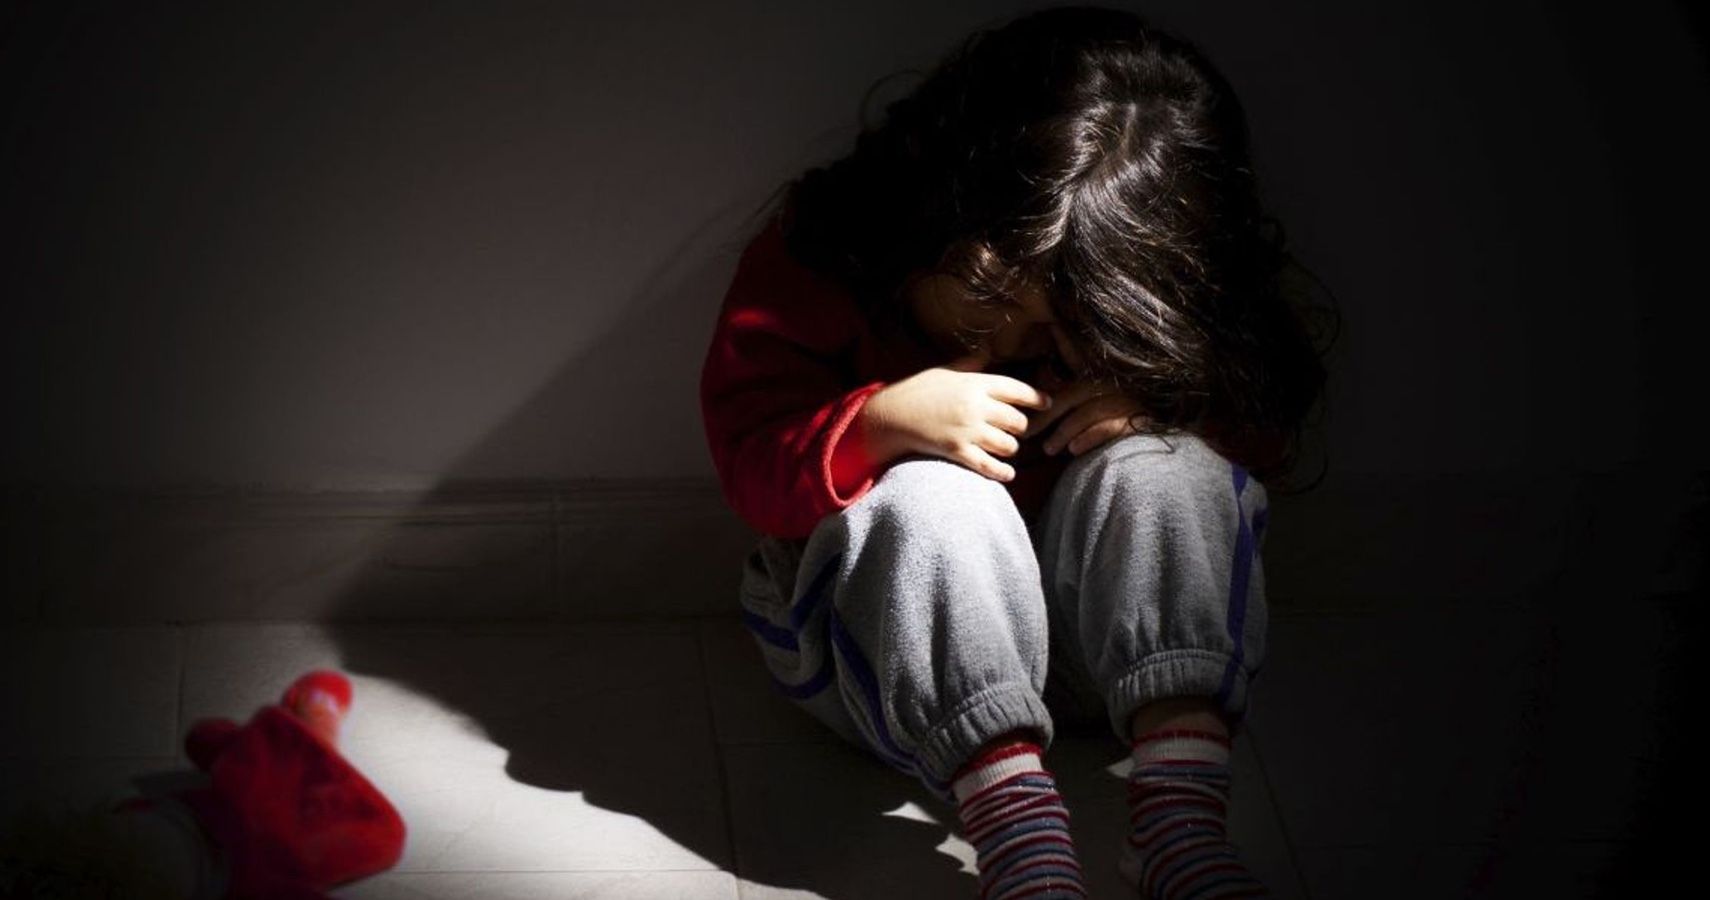 symptoms of childhood trauma in adulthood